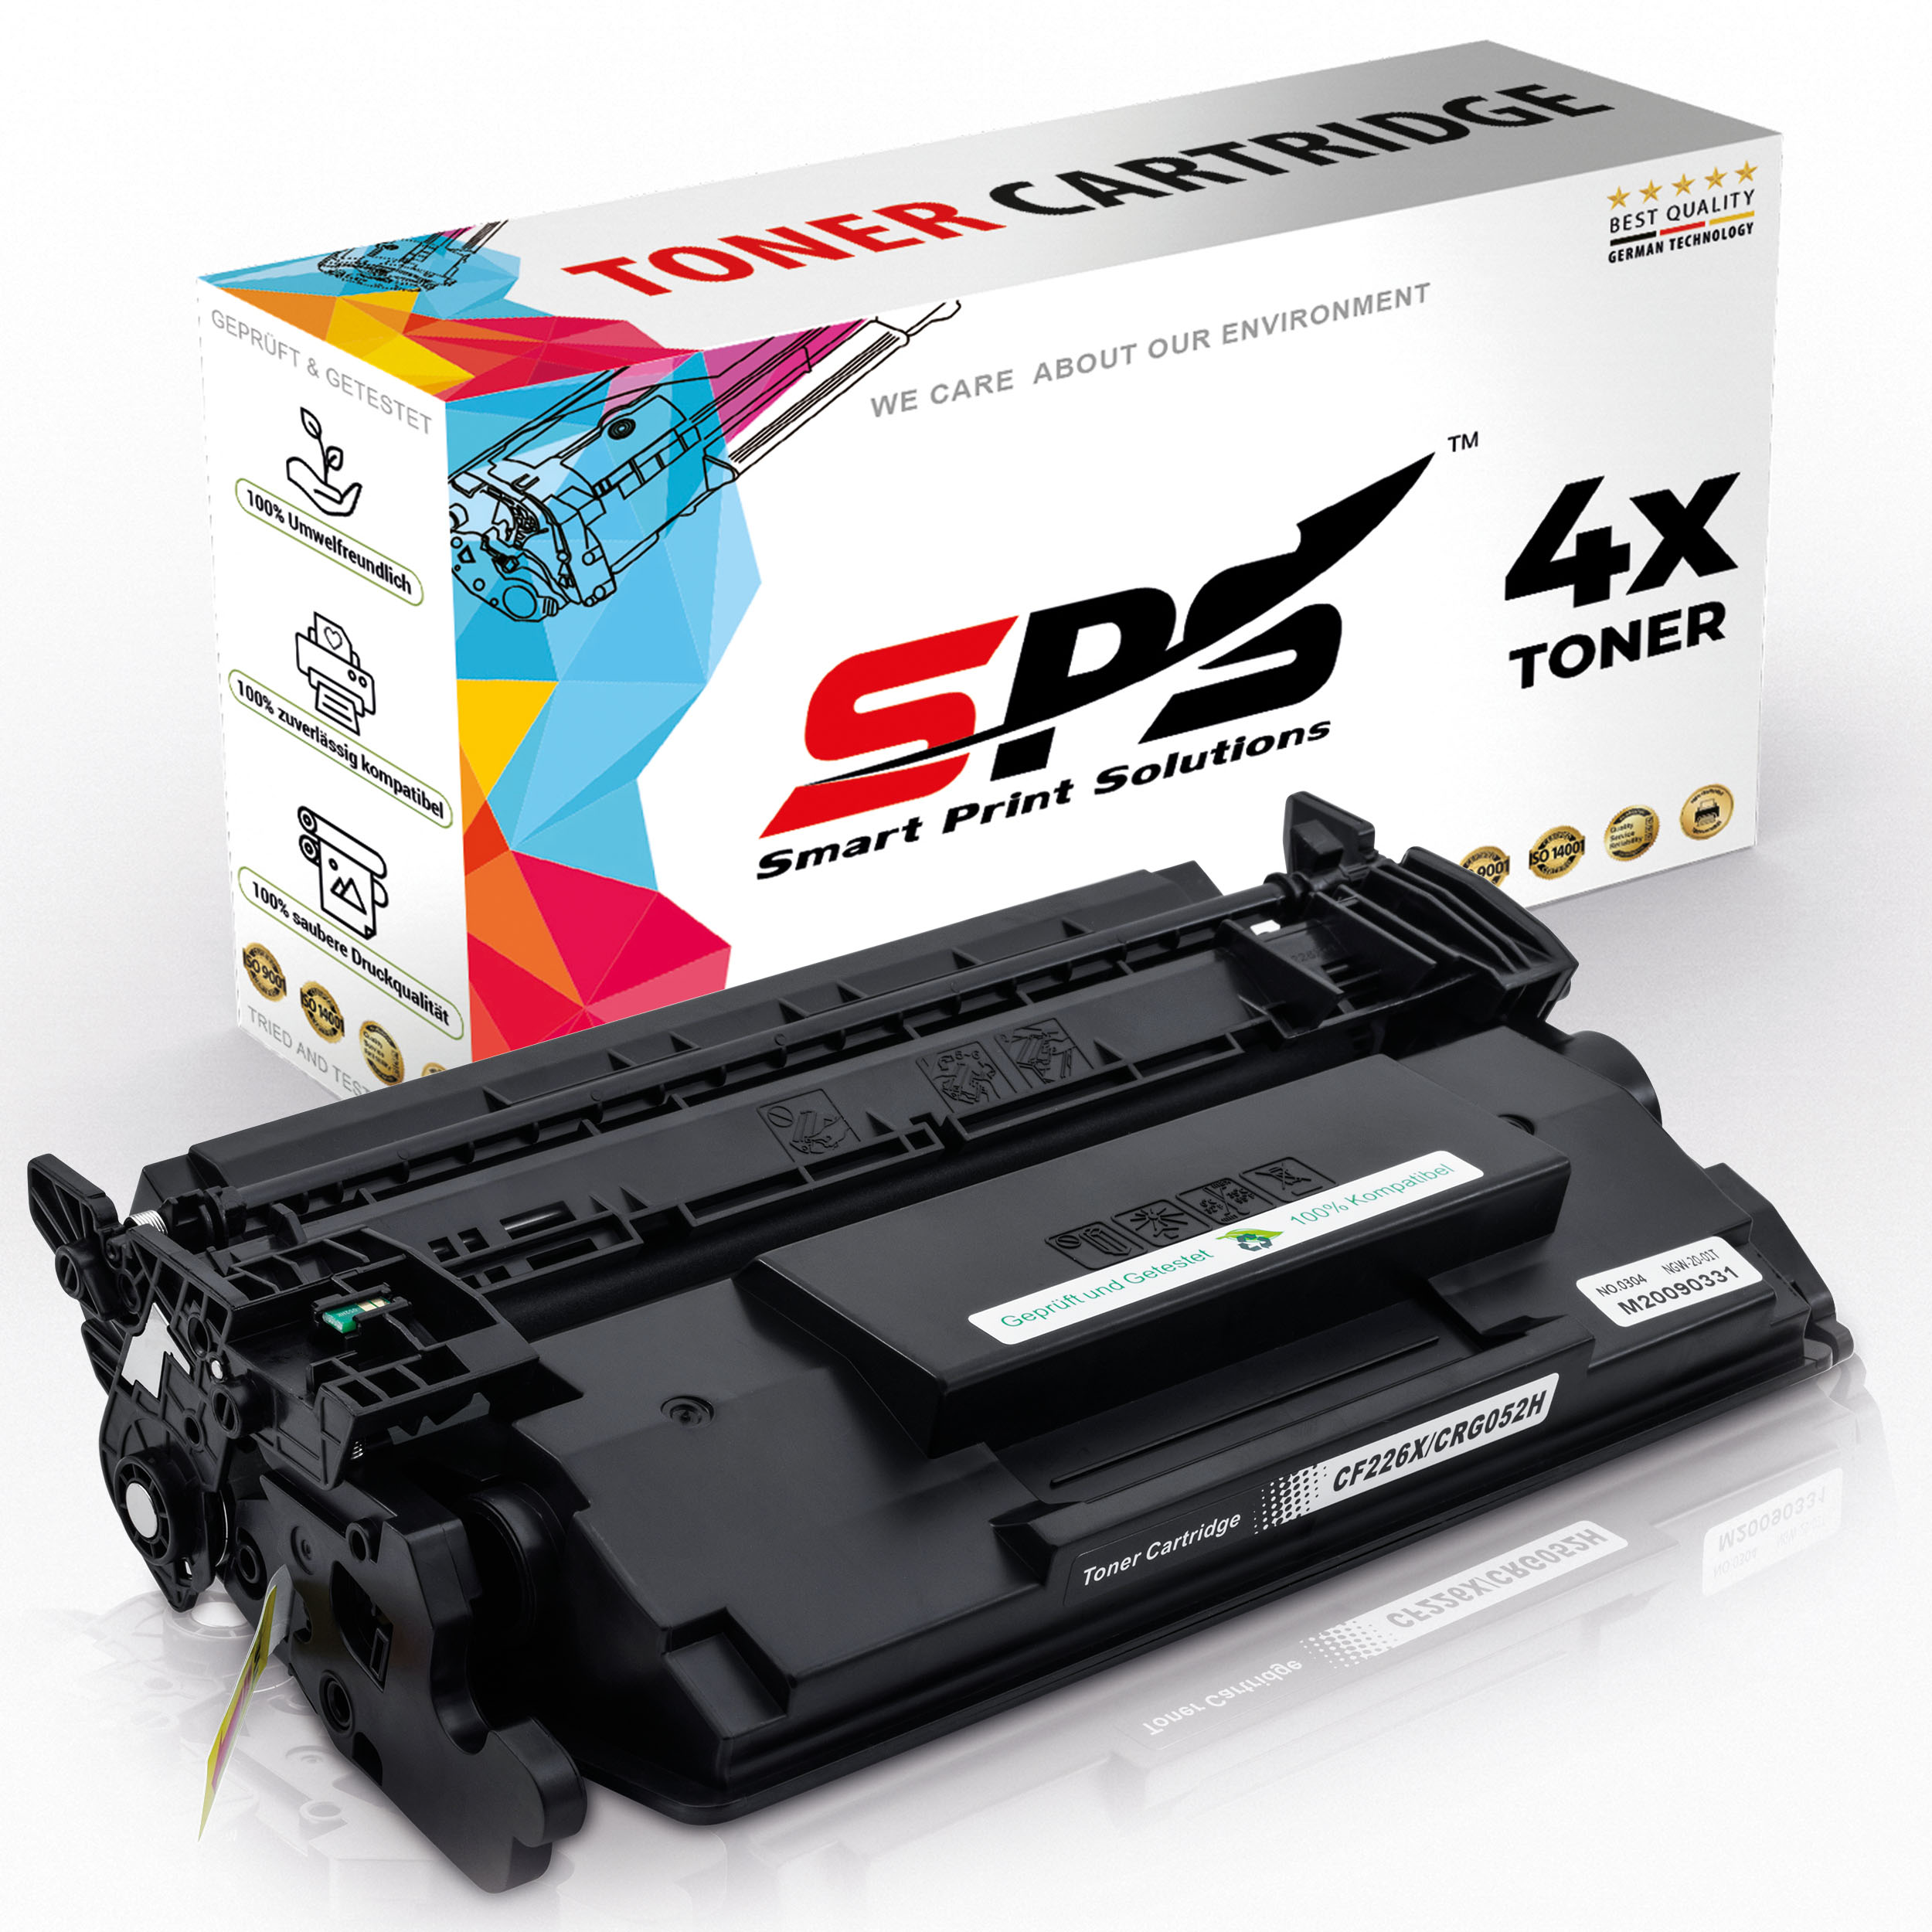 SPS S-11473 Toner / CF226X Laserjet Pro (26X Schwarz M402N)